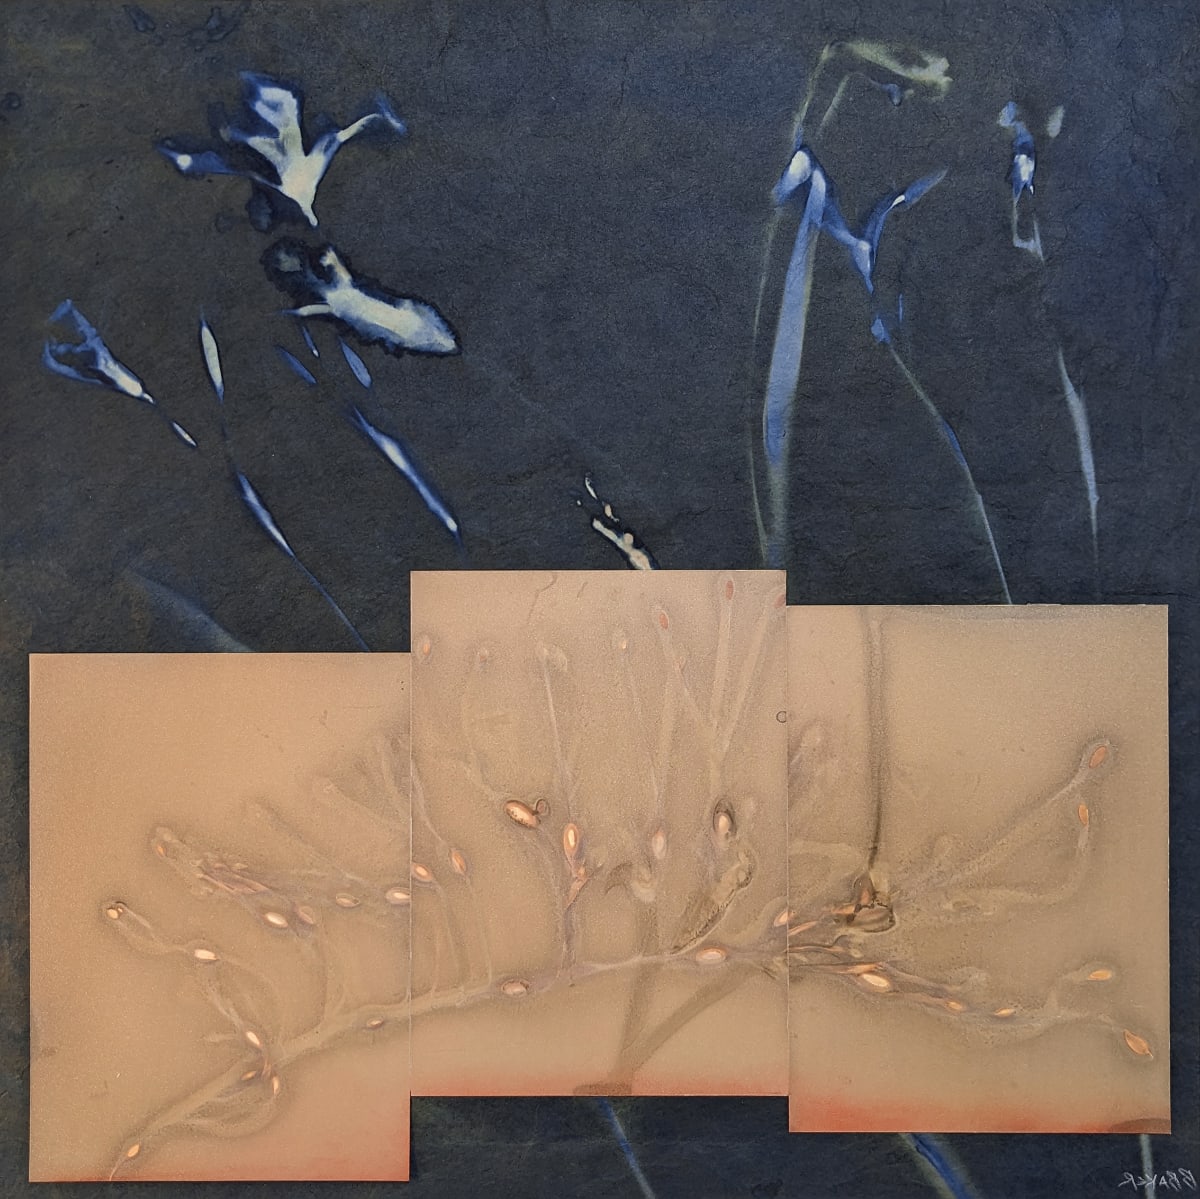 Wild Iris by Bonnie Baker Studio  Image: Cyanotype on washi, lumen prints on Silver Gelatin Paper, acrylic paint